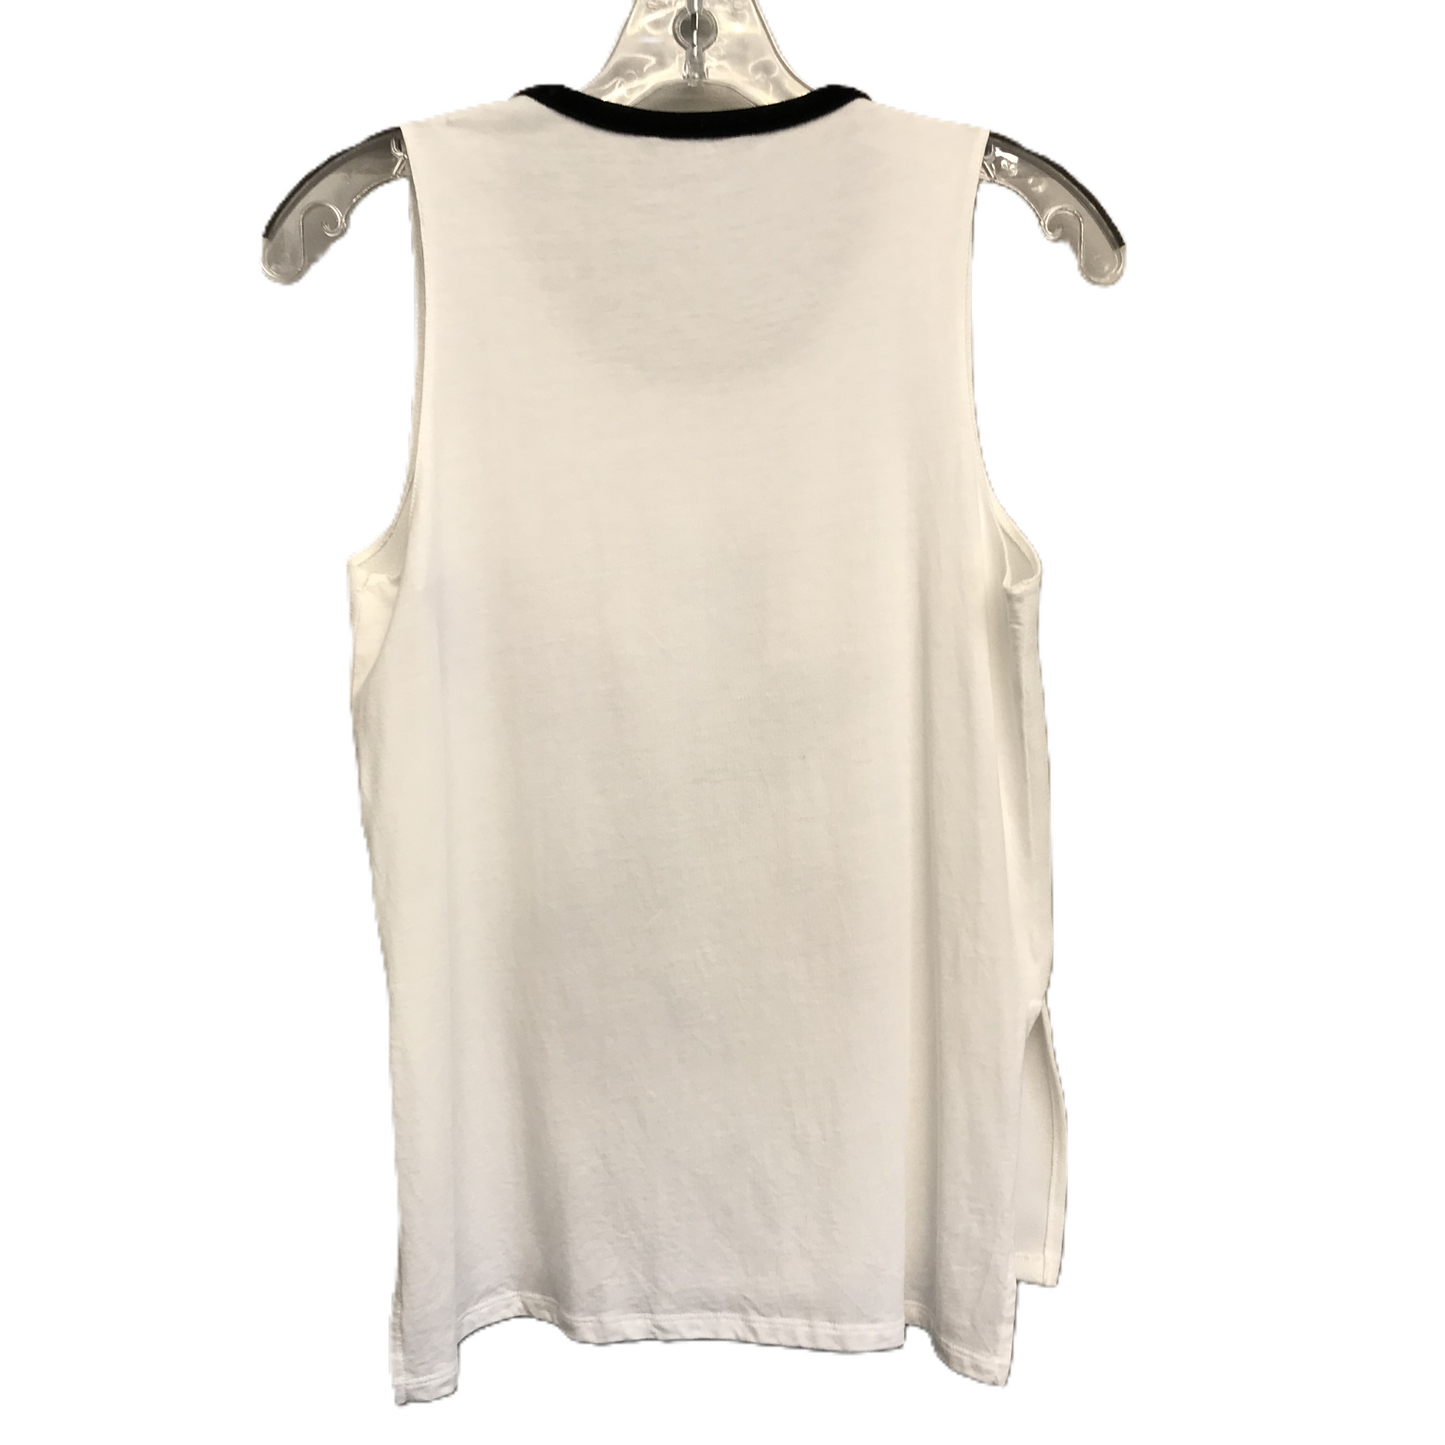 White Top Sleeveless By Zara, Size: S